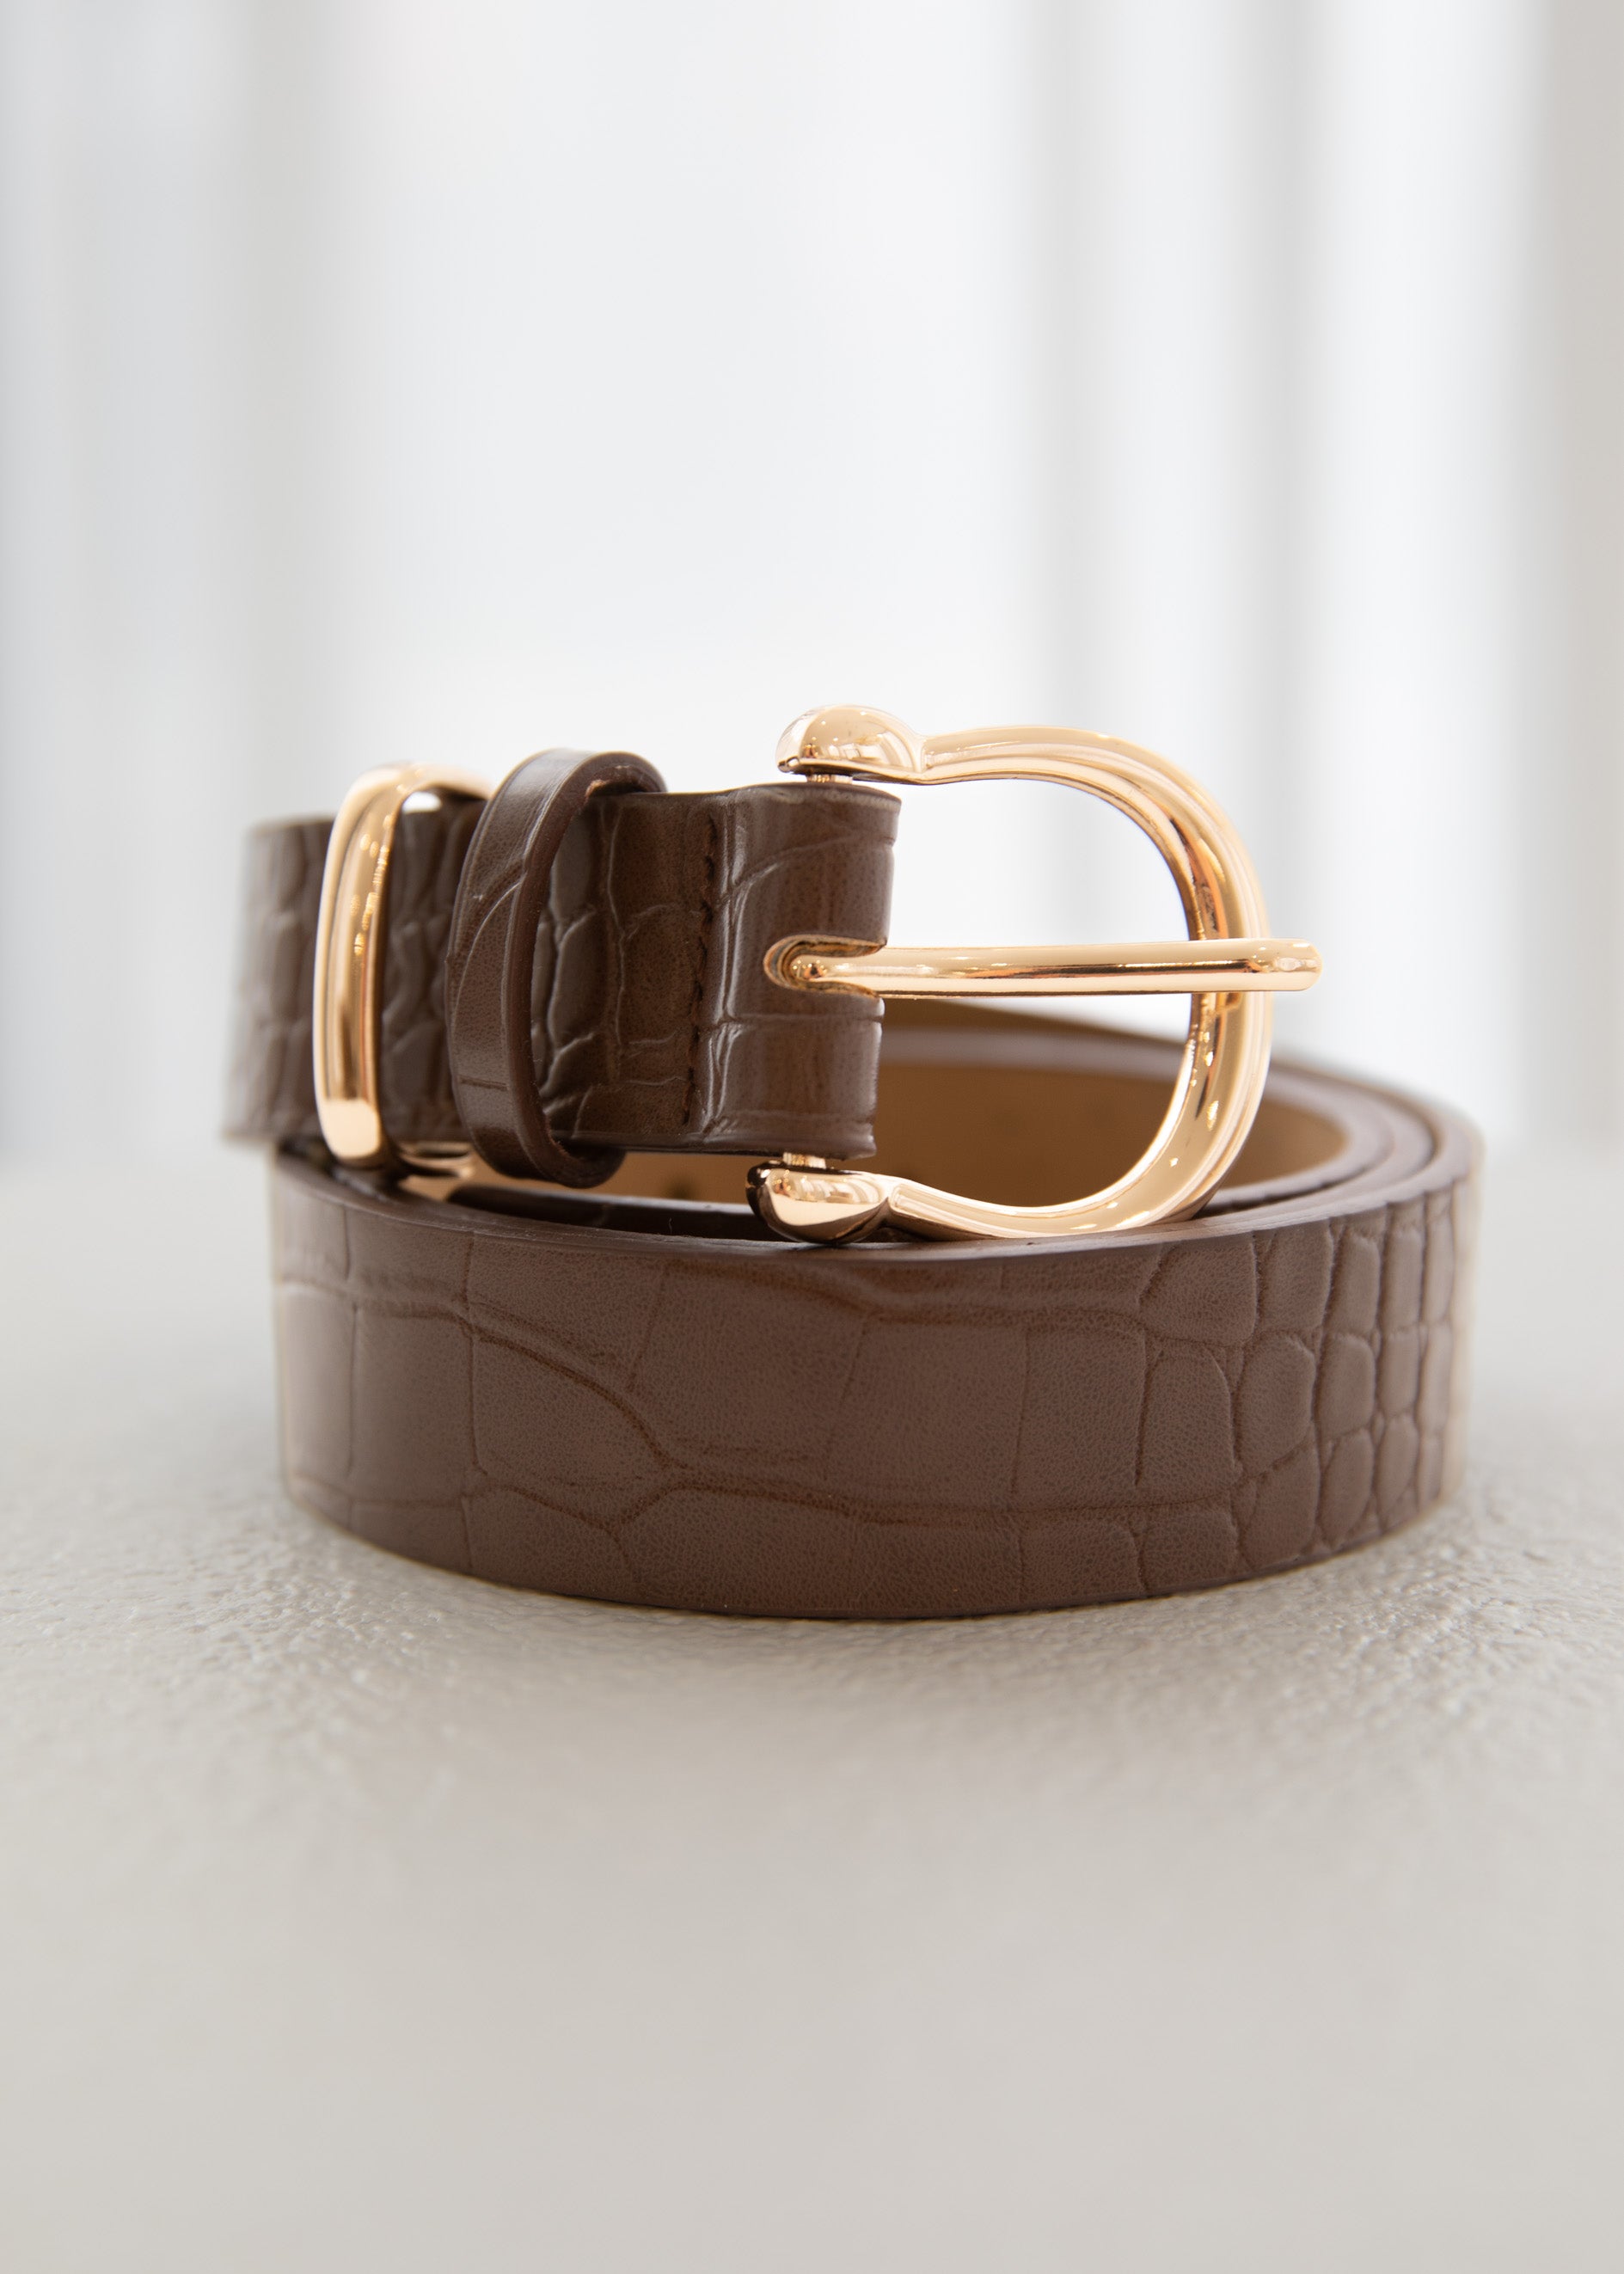 Narelle Buckle Belt - Chocolate Croc